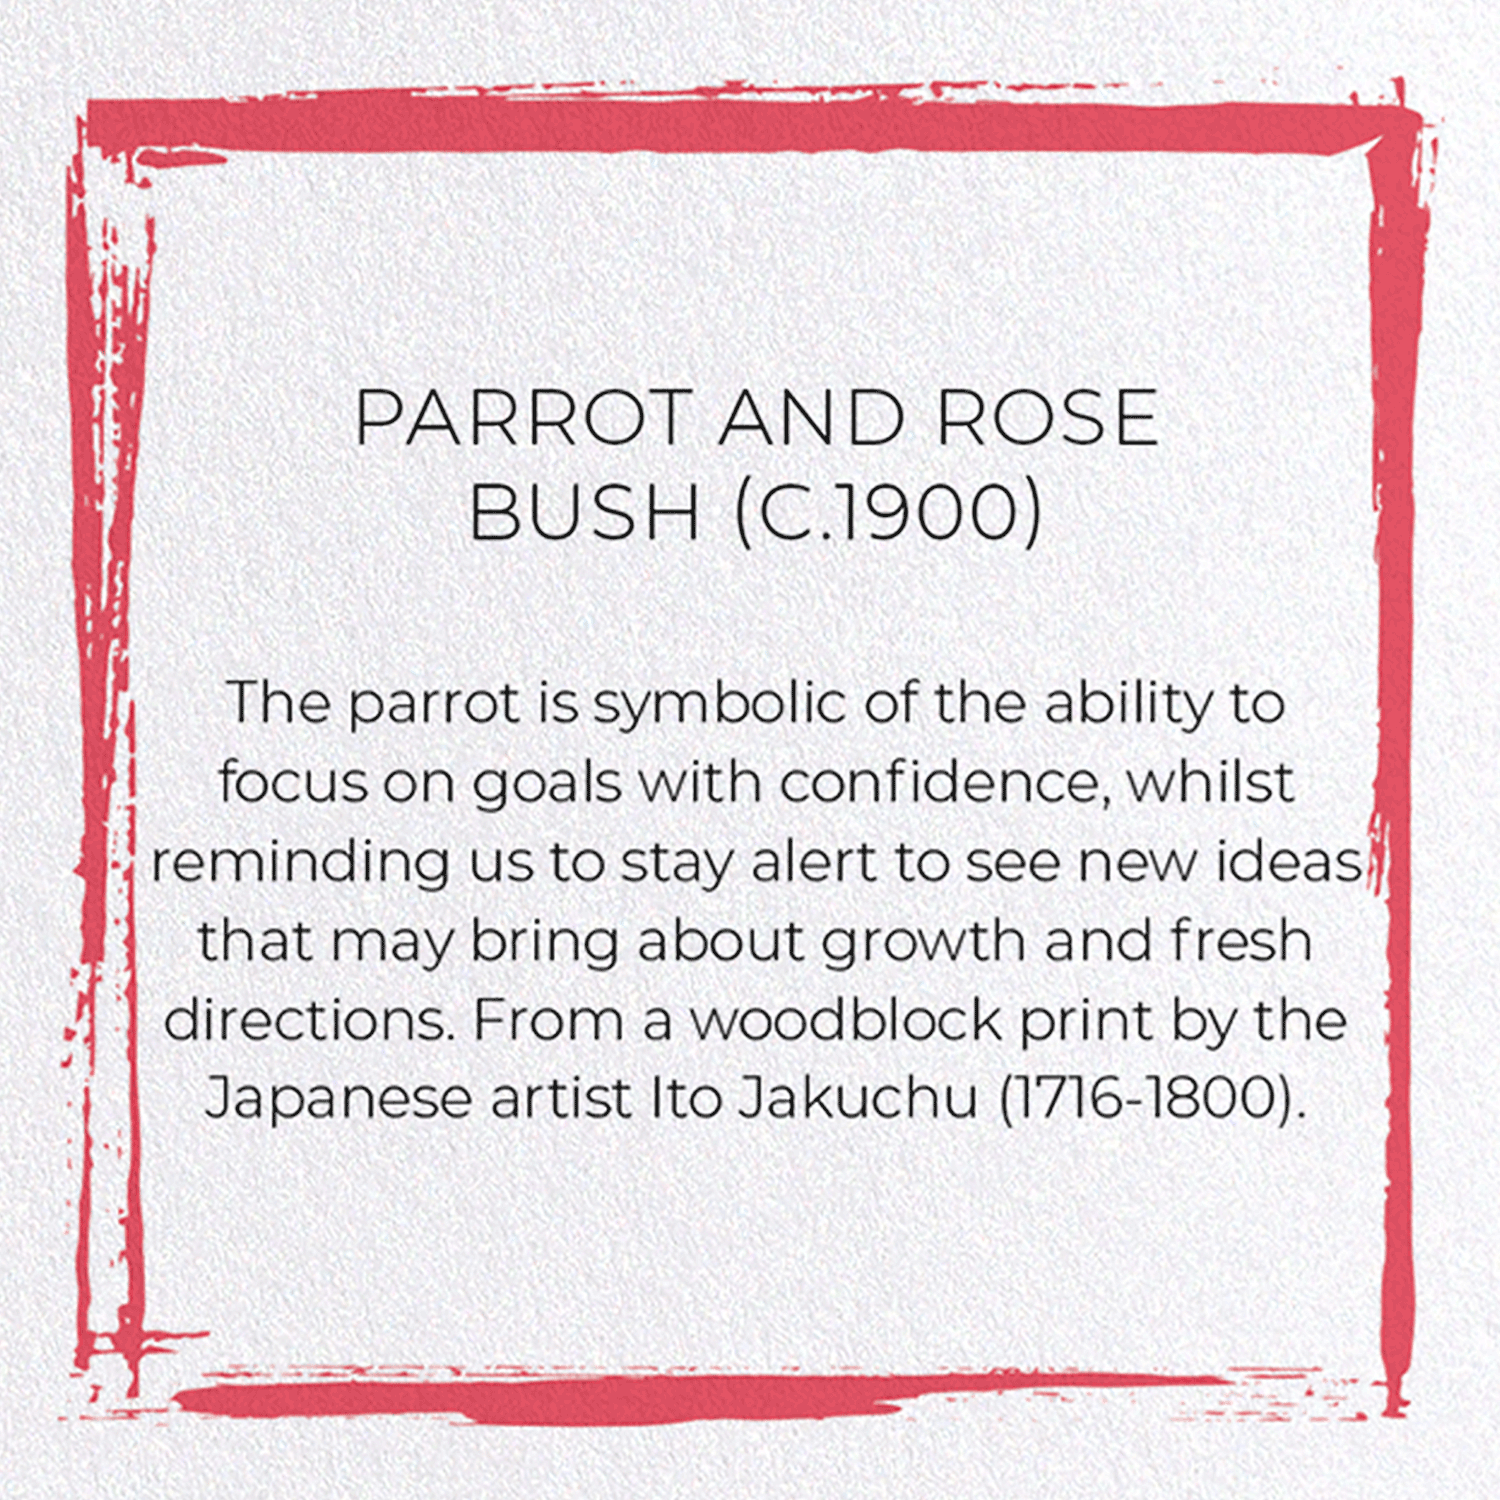 PARROT AND ROSE BUSH (C.1900)